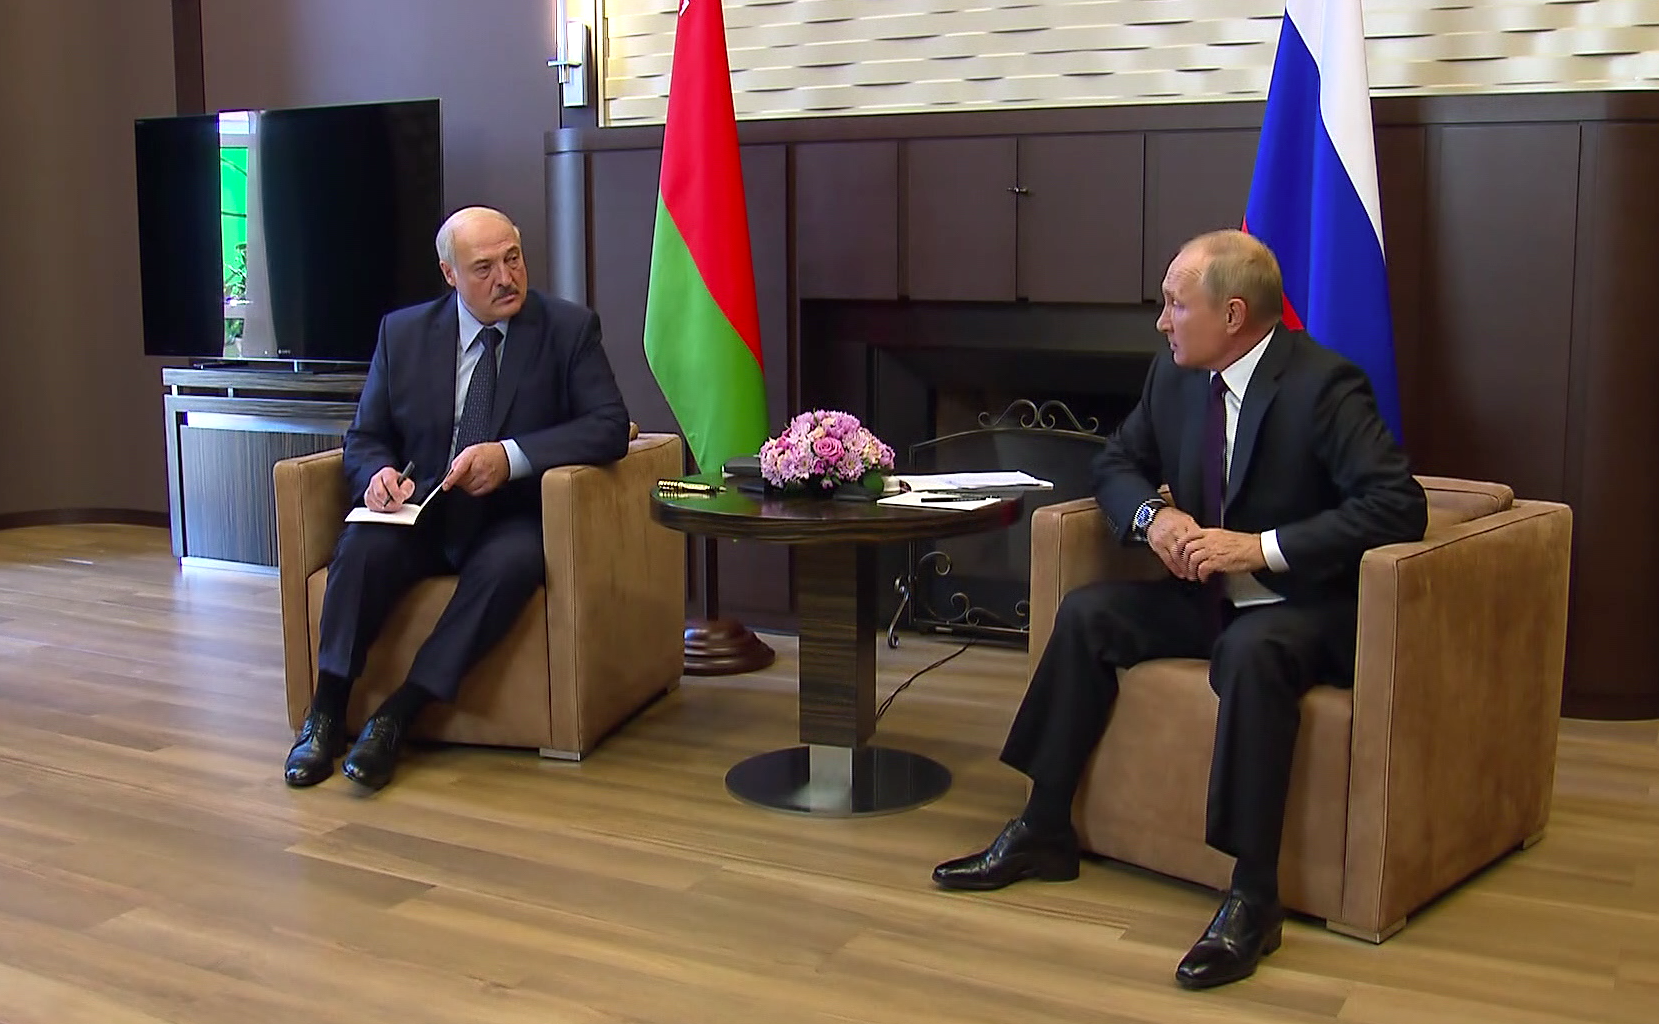 KREMLIN 2 X 4 DU 14.09.2020. BELARUS Avec le président de la Biélorussie Alexandre Loukachenko. AUS82bvAa8u8xINpf6CDahfPUsApgcLn